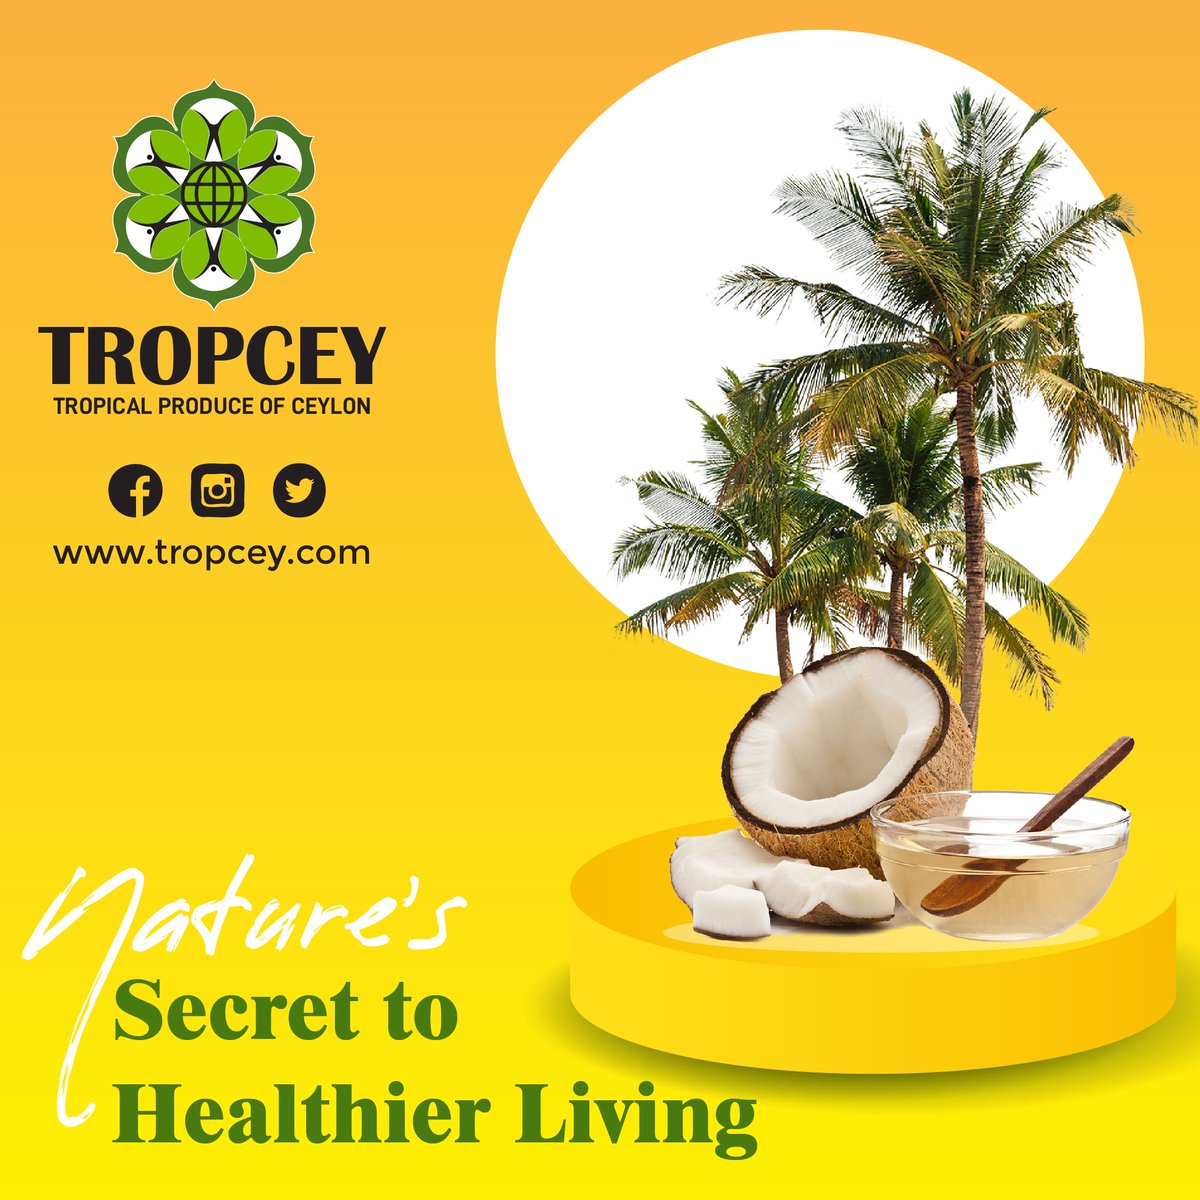 Nature's Secret to Healthier Living...😊
#naturessecret #healthierliving #tropceyexport #madeinsrilanka #coconutoil #coconutwater #coconutmilk #coconutchips #coconut #coconutproducts #coconutindustry #tropical